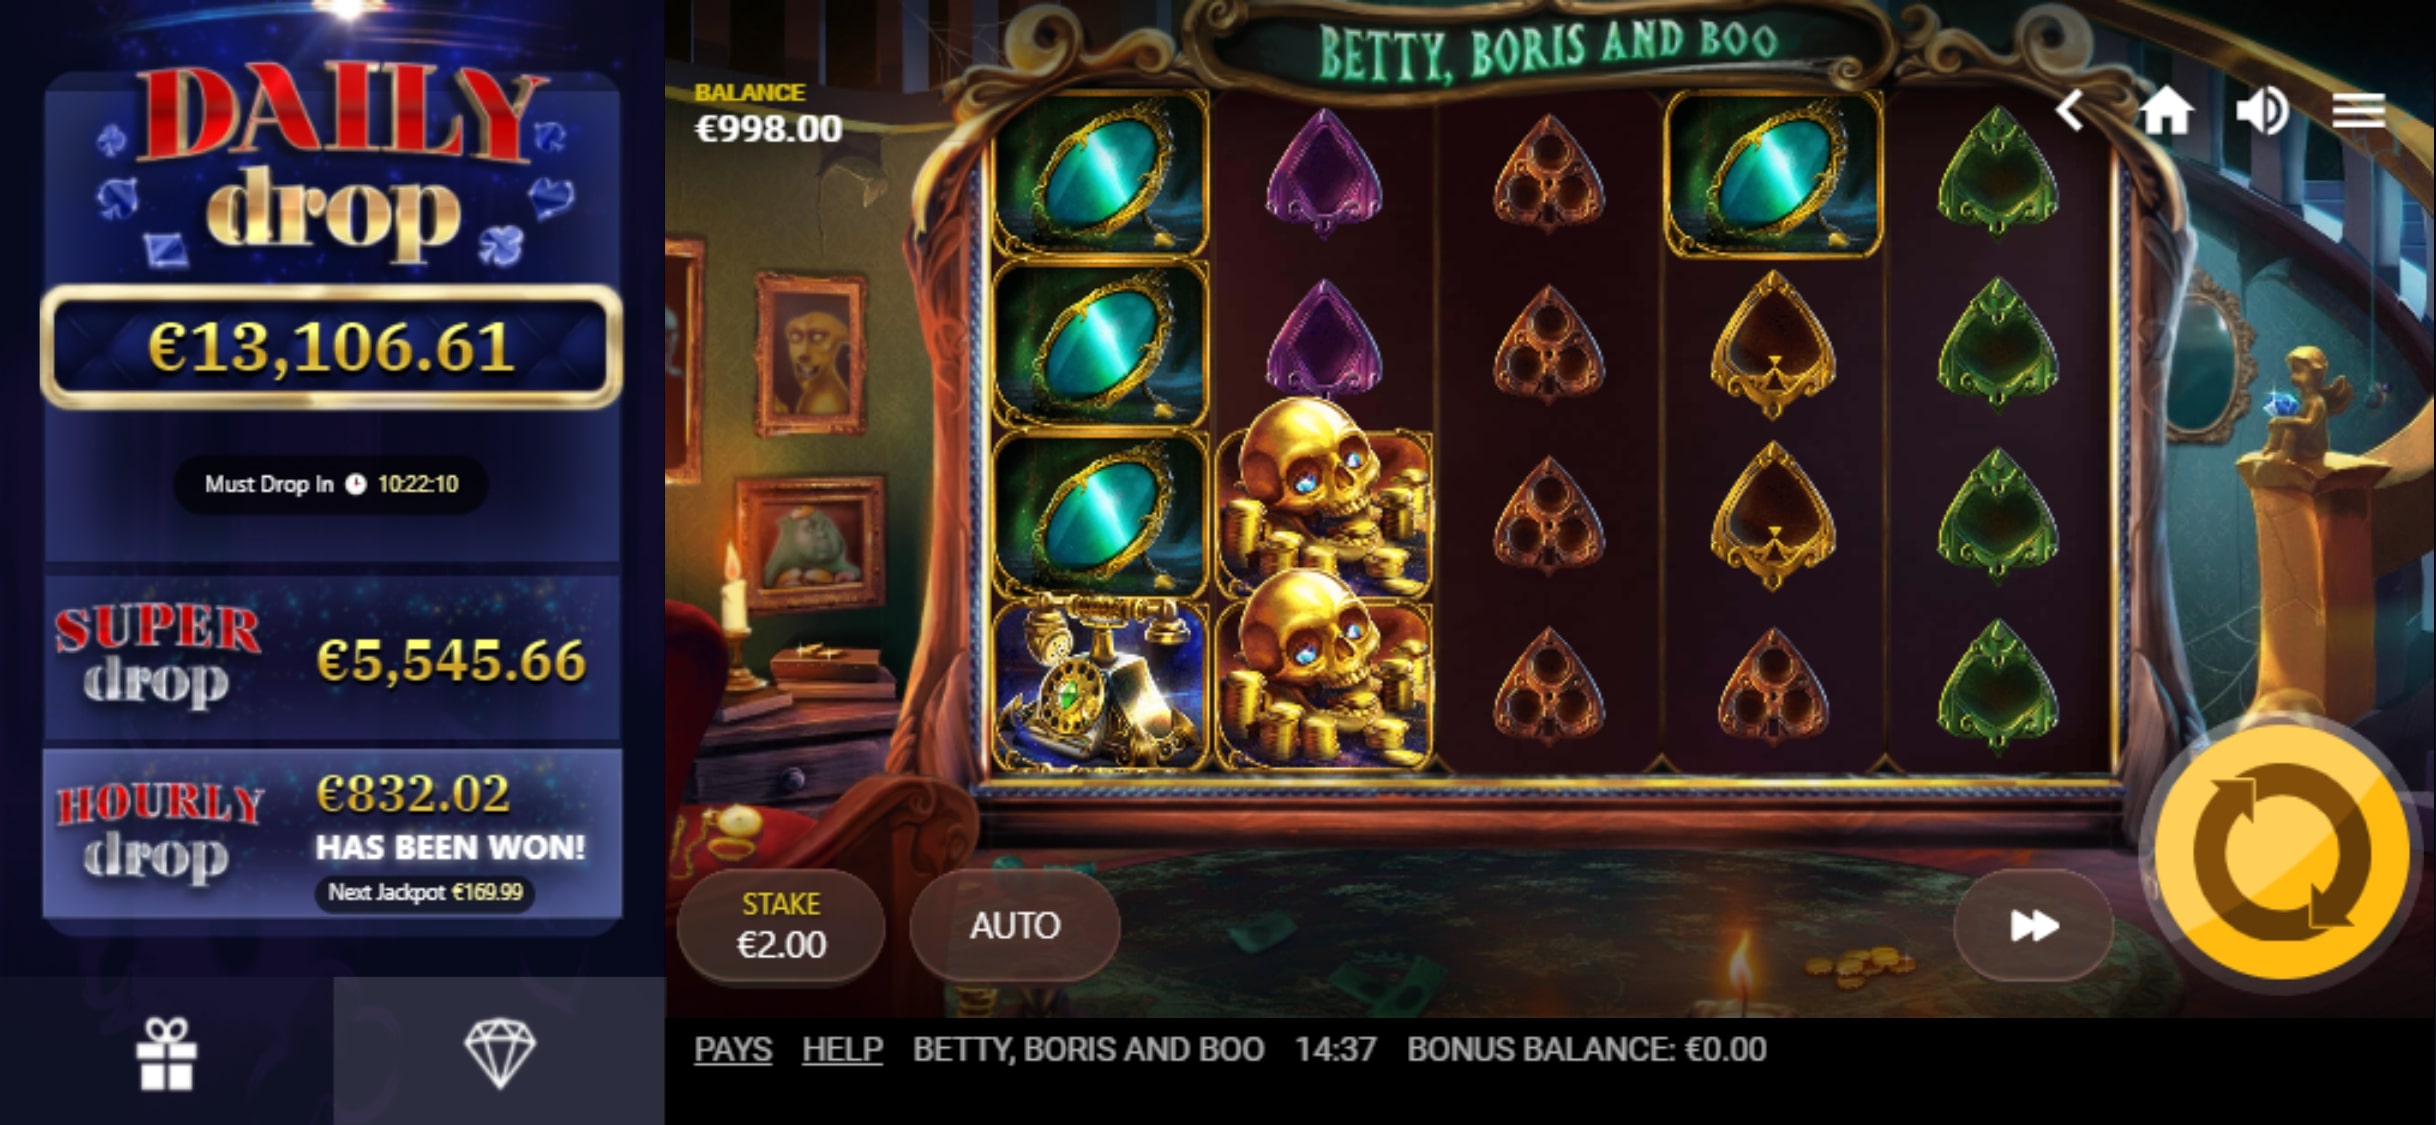 Rizk Casino Mobile Slot Games Review